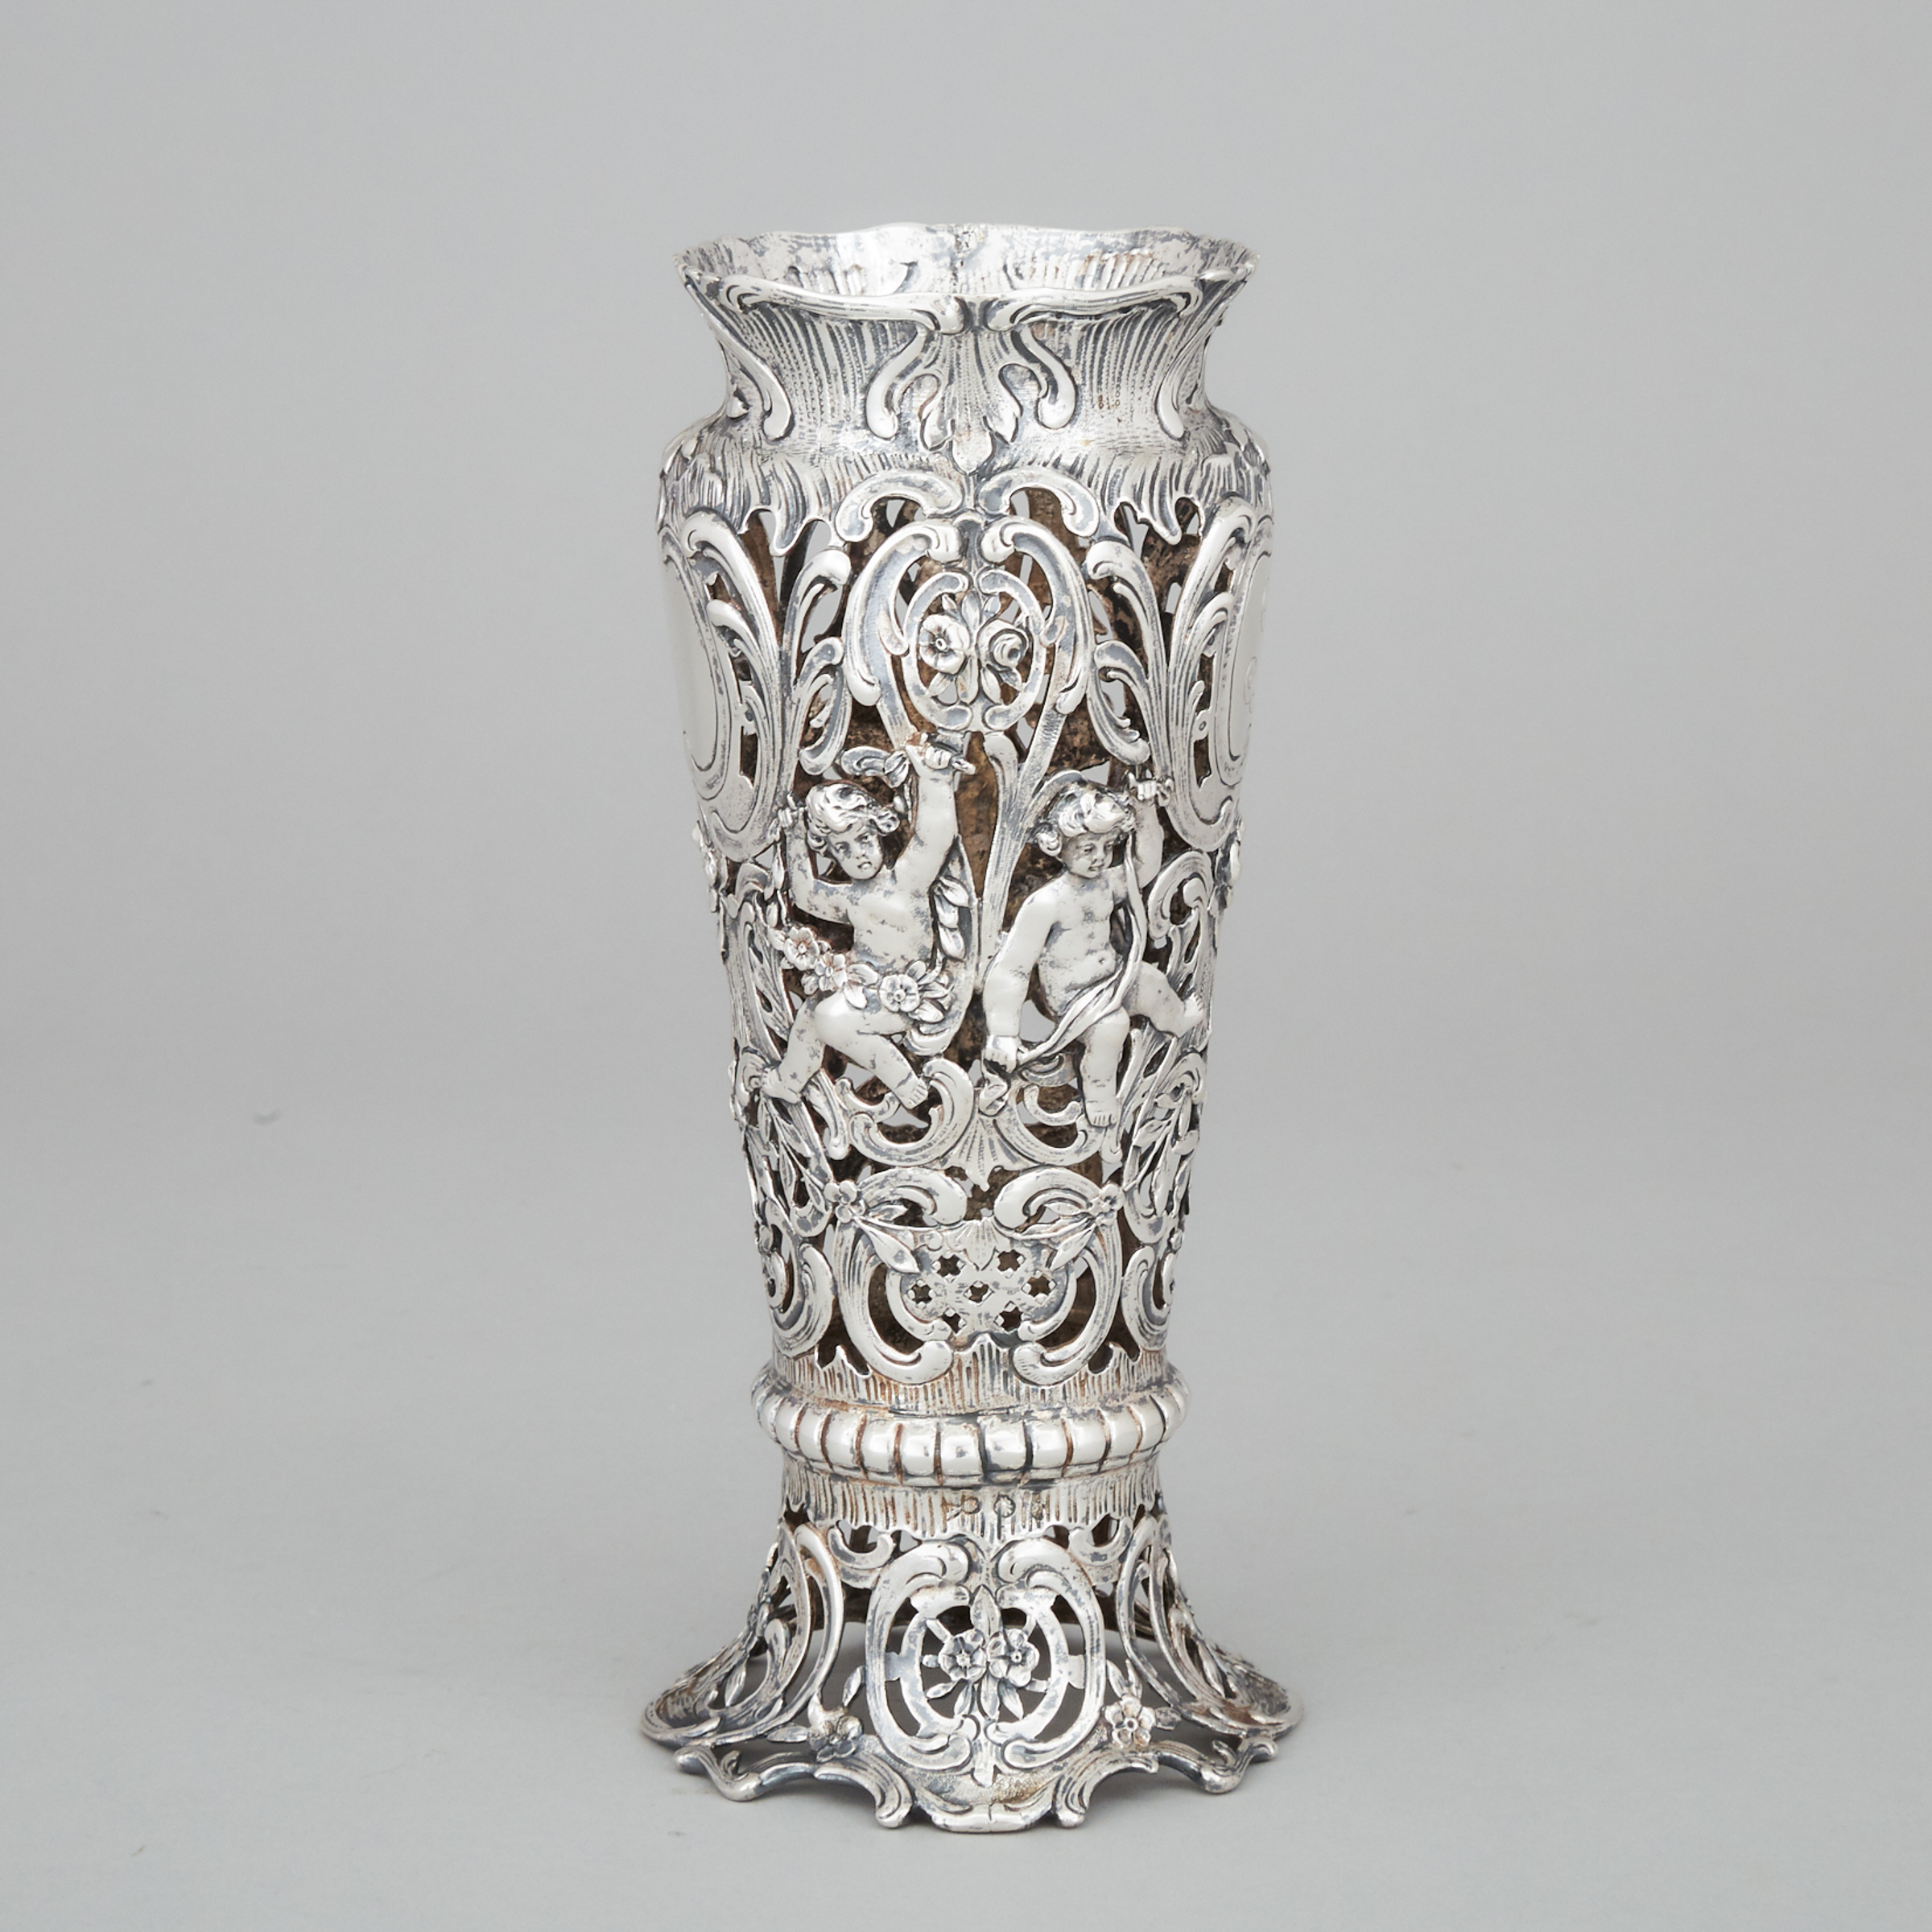 German Silver Openwork Vase, Storck & Sinsheimer, Hanau, c.1900